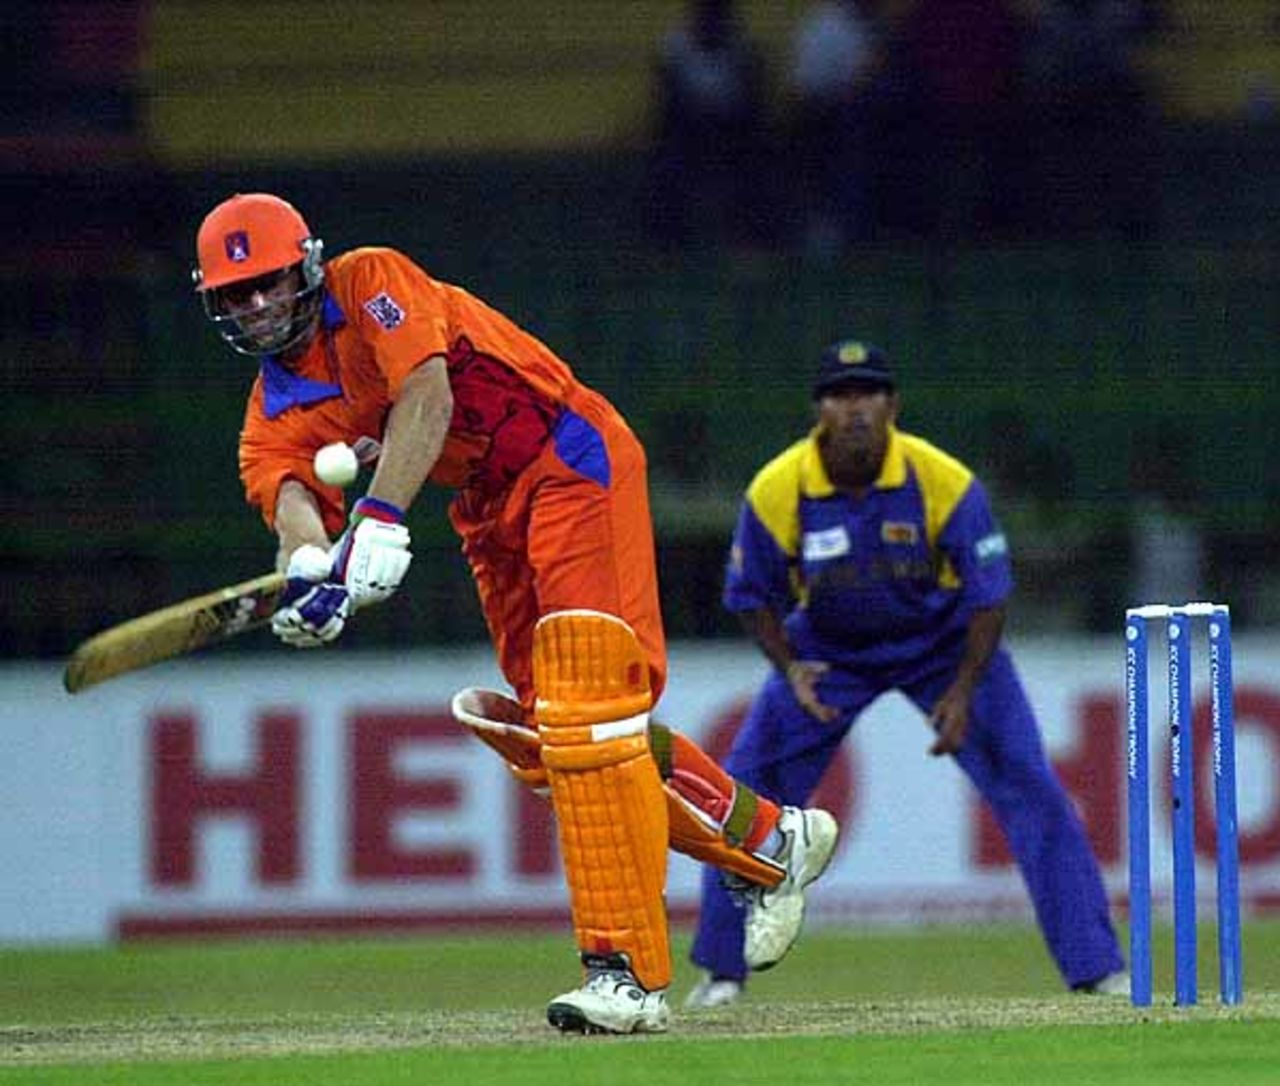 ICC Champions Trophy, Sri Lanka v Netherlands, 16th September 2002, Colombo